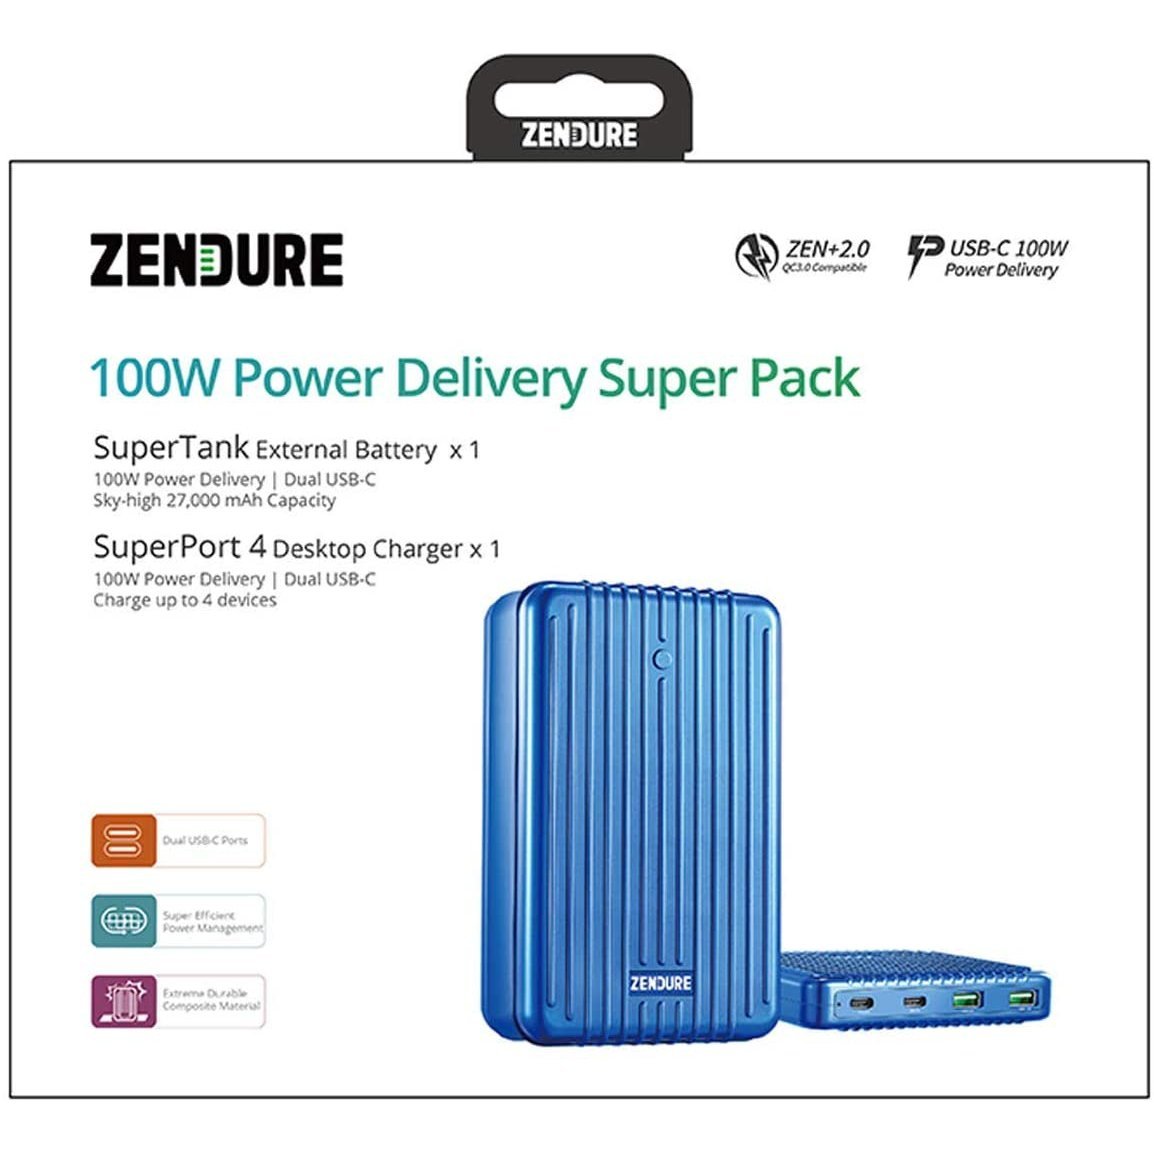 Zendure 100W Power Delivery Super Pack